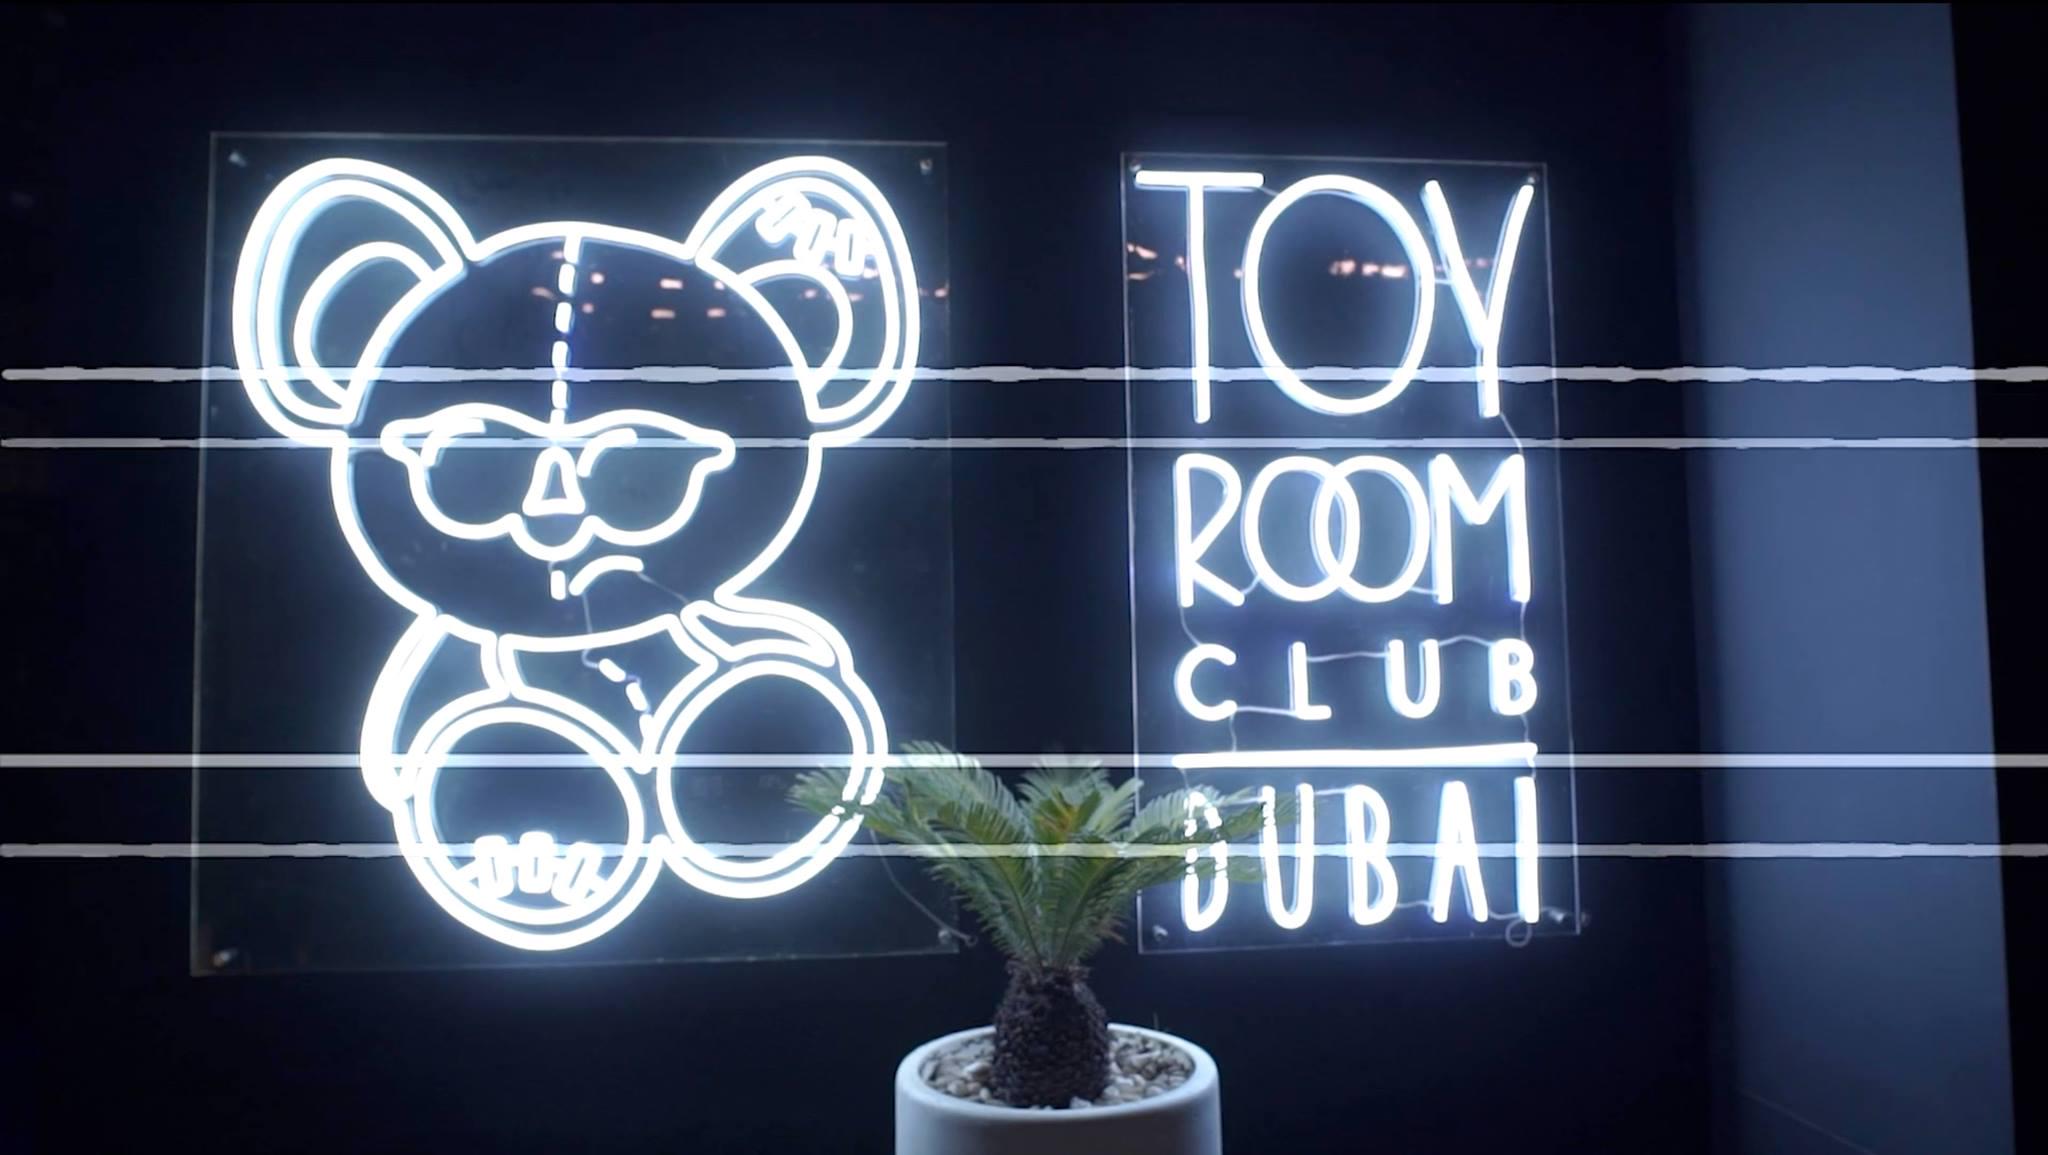 Toy Room Dubai